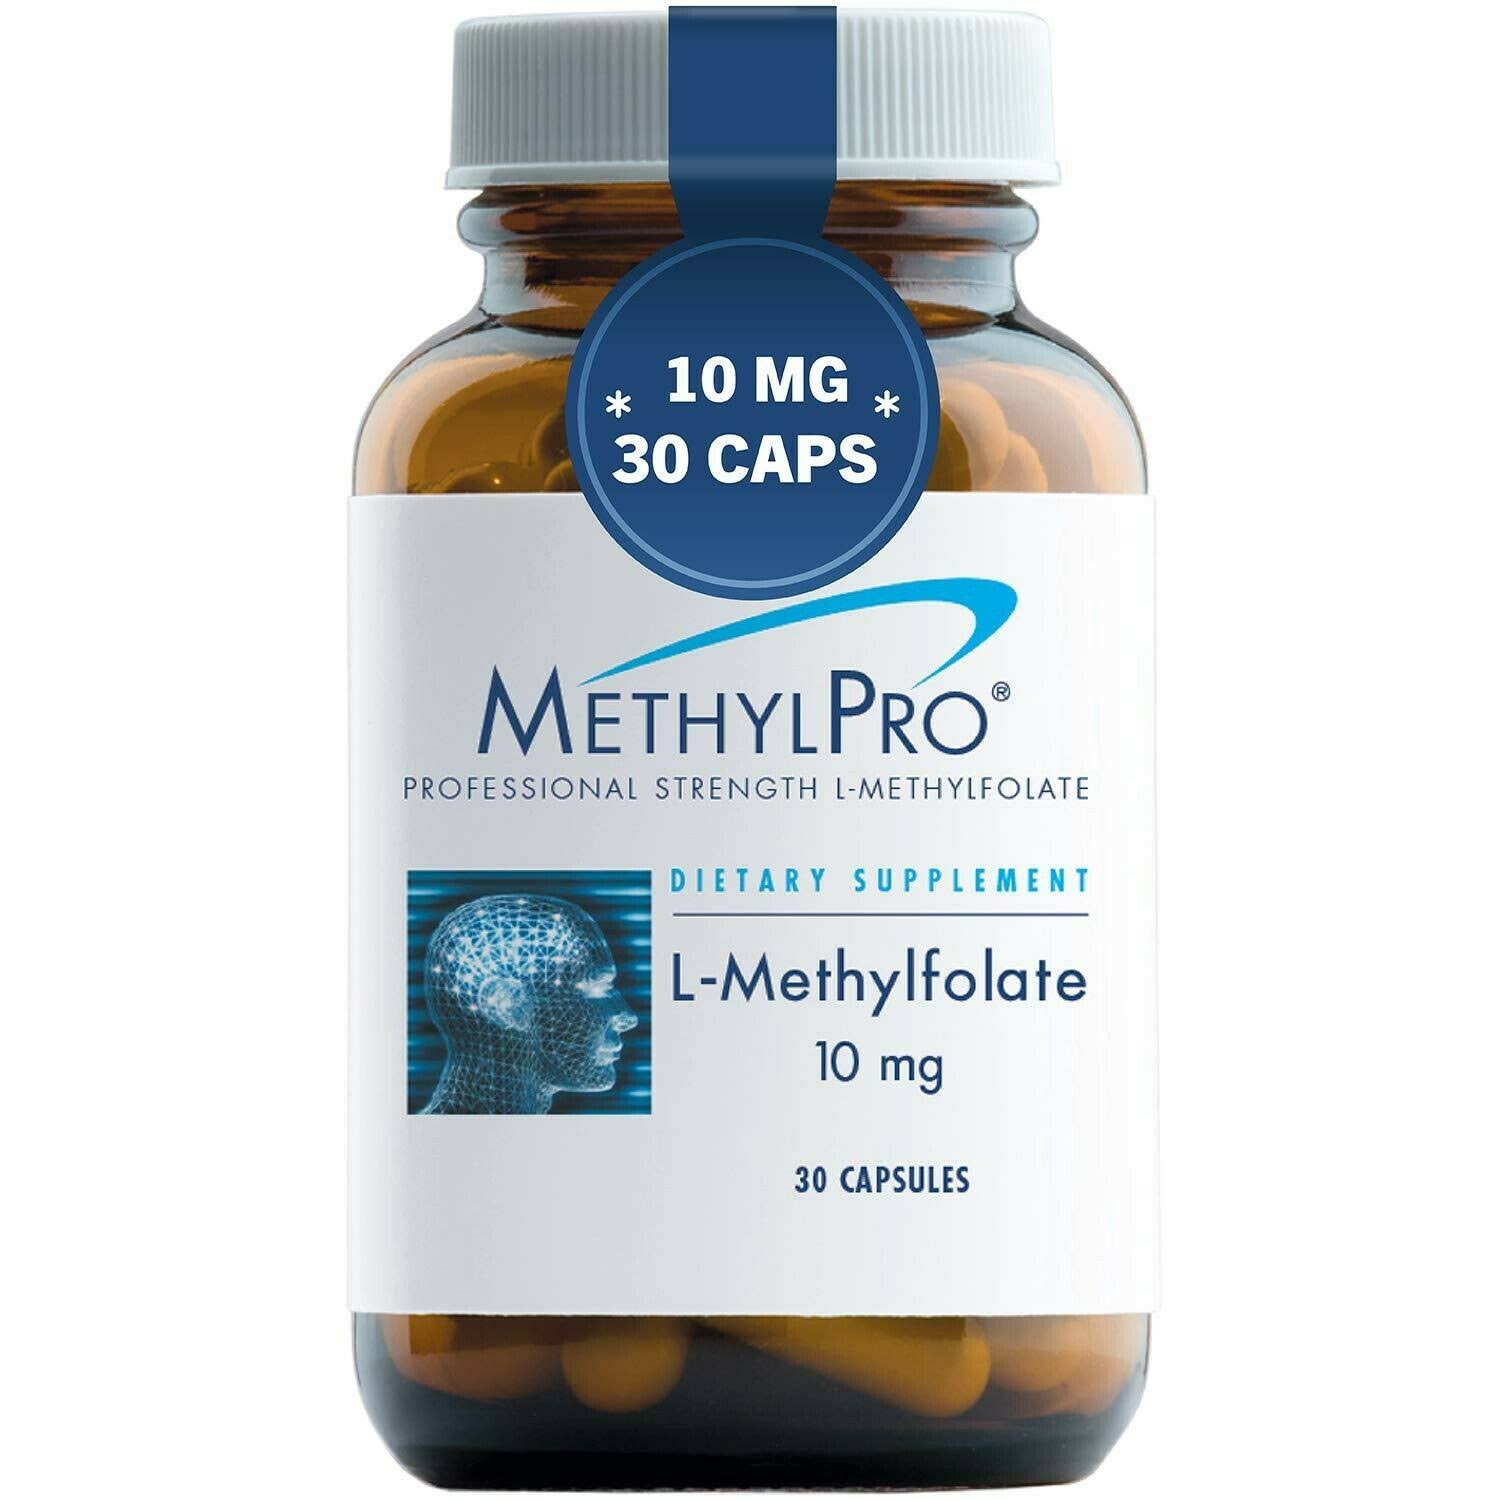 Methyl Pro Professional Strength L Methylfolate Dietary Supplement - 30ct